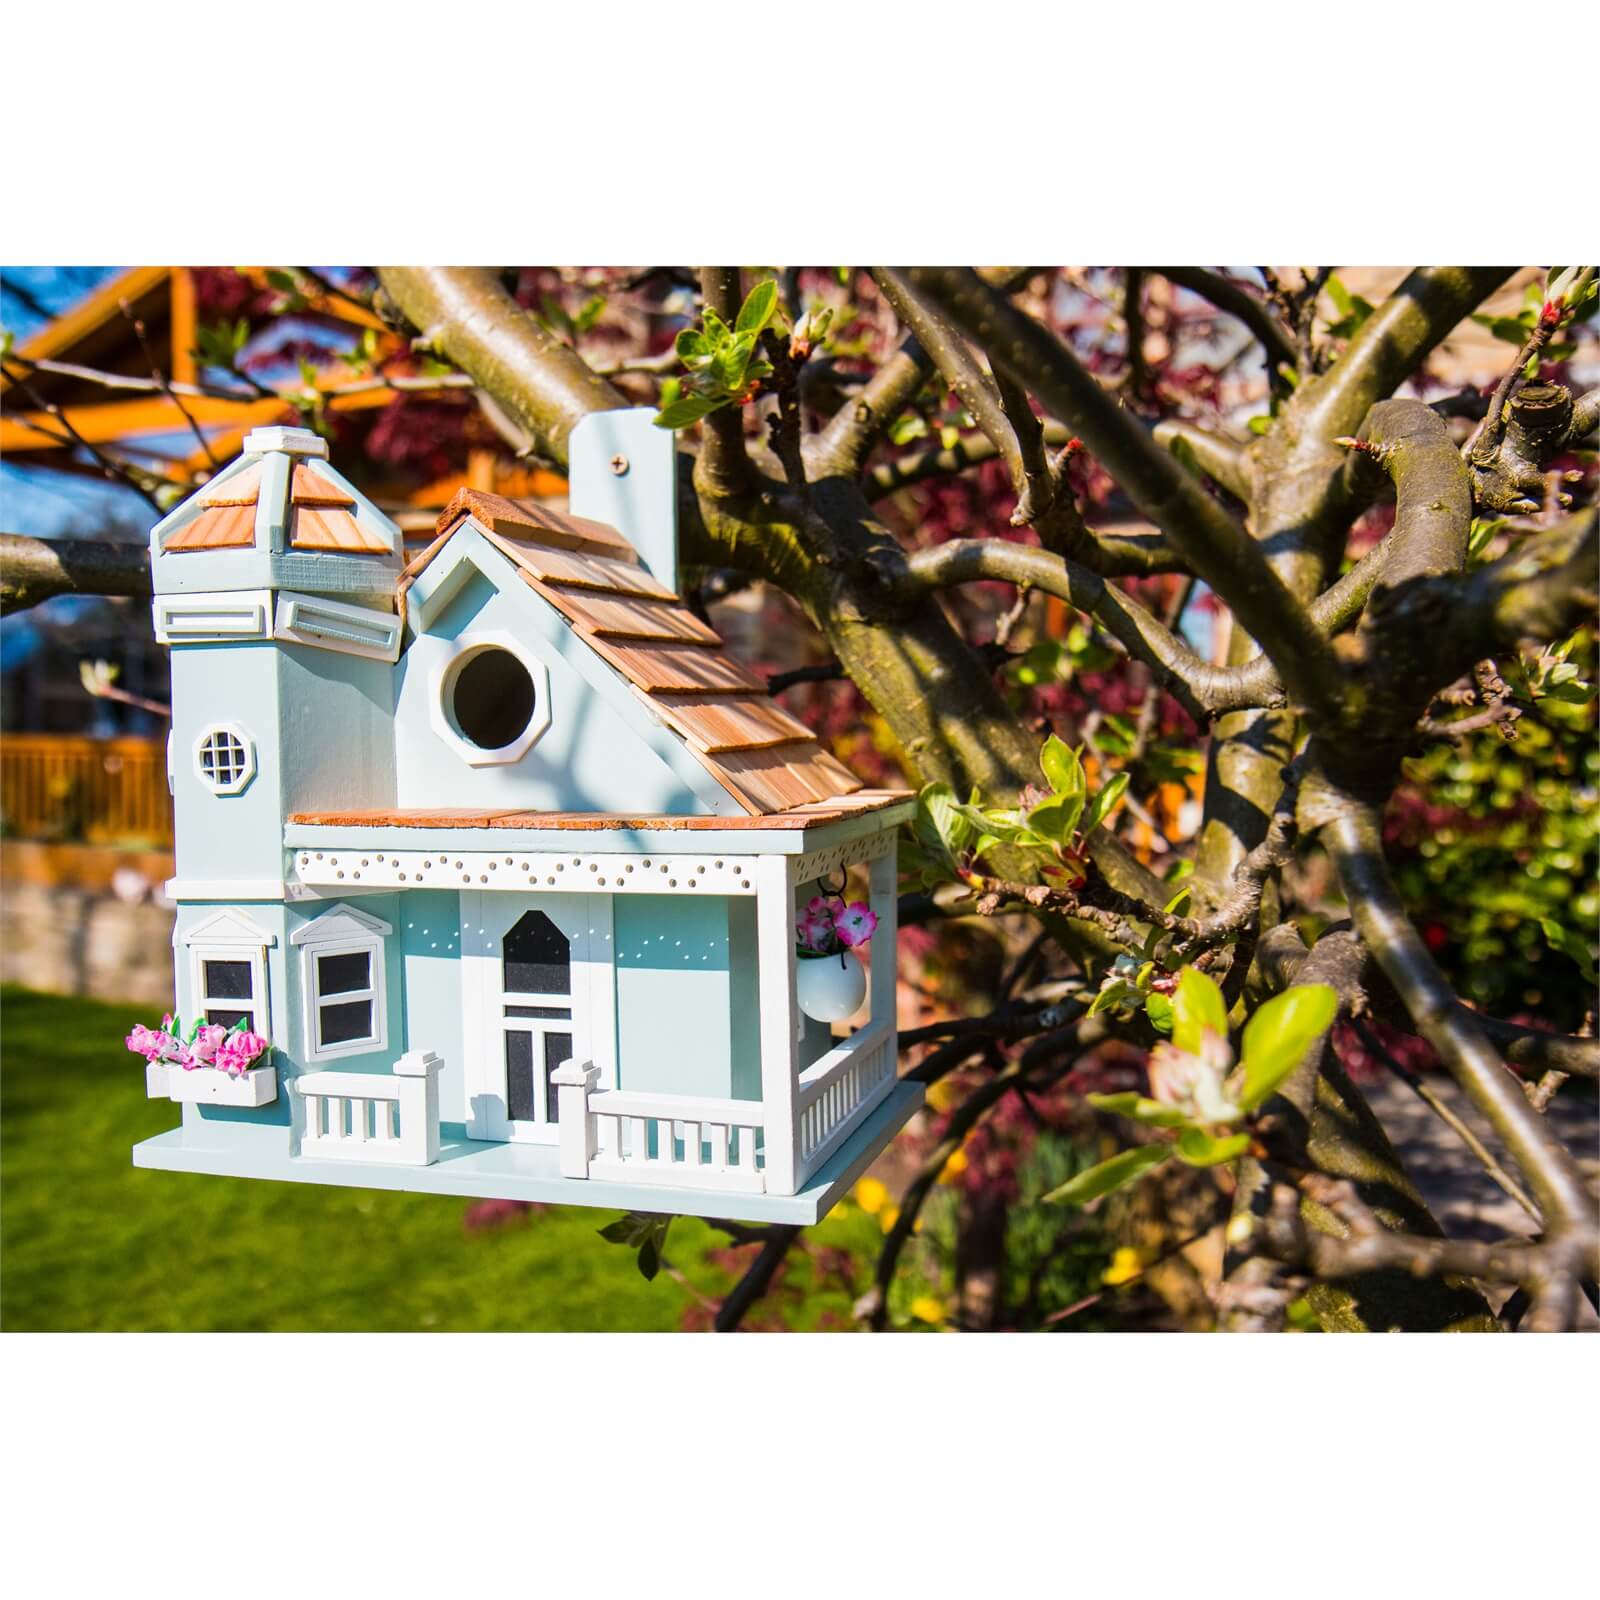 Flower Pot Cottage Bird House Blue